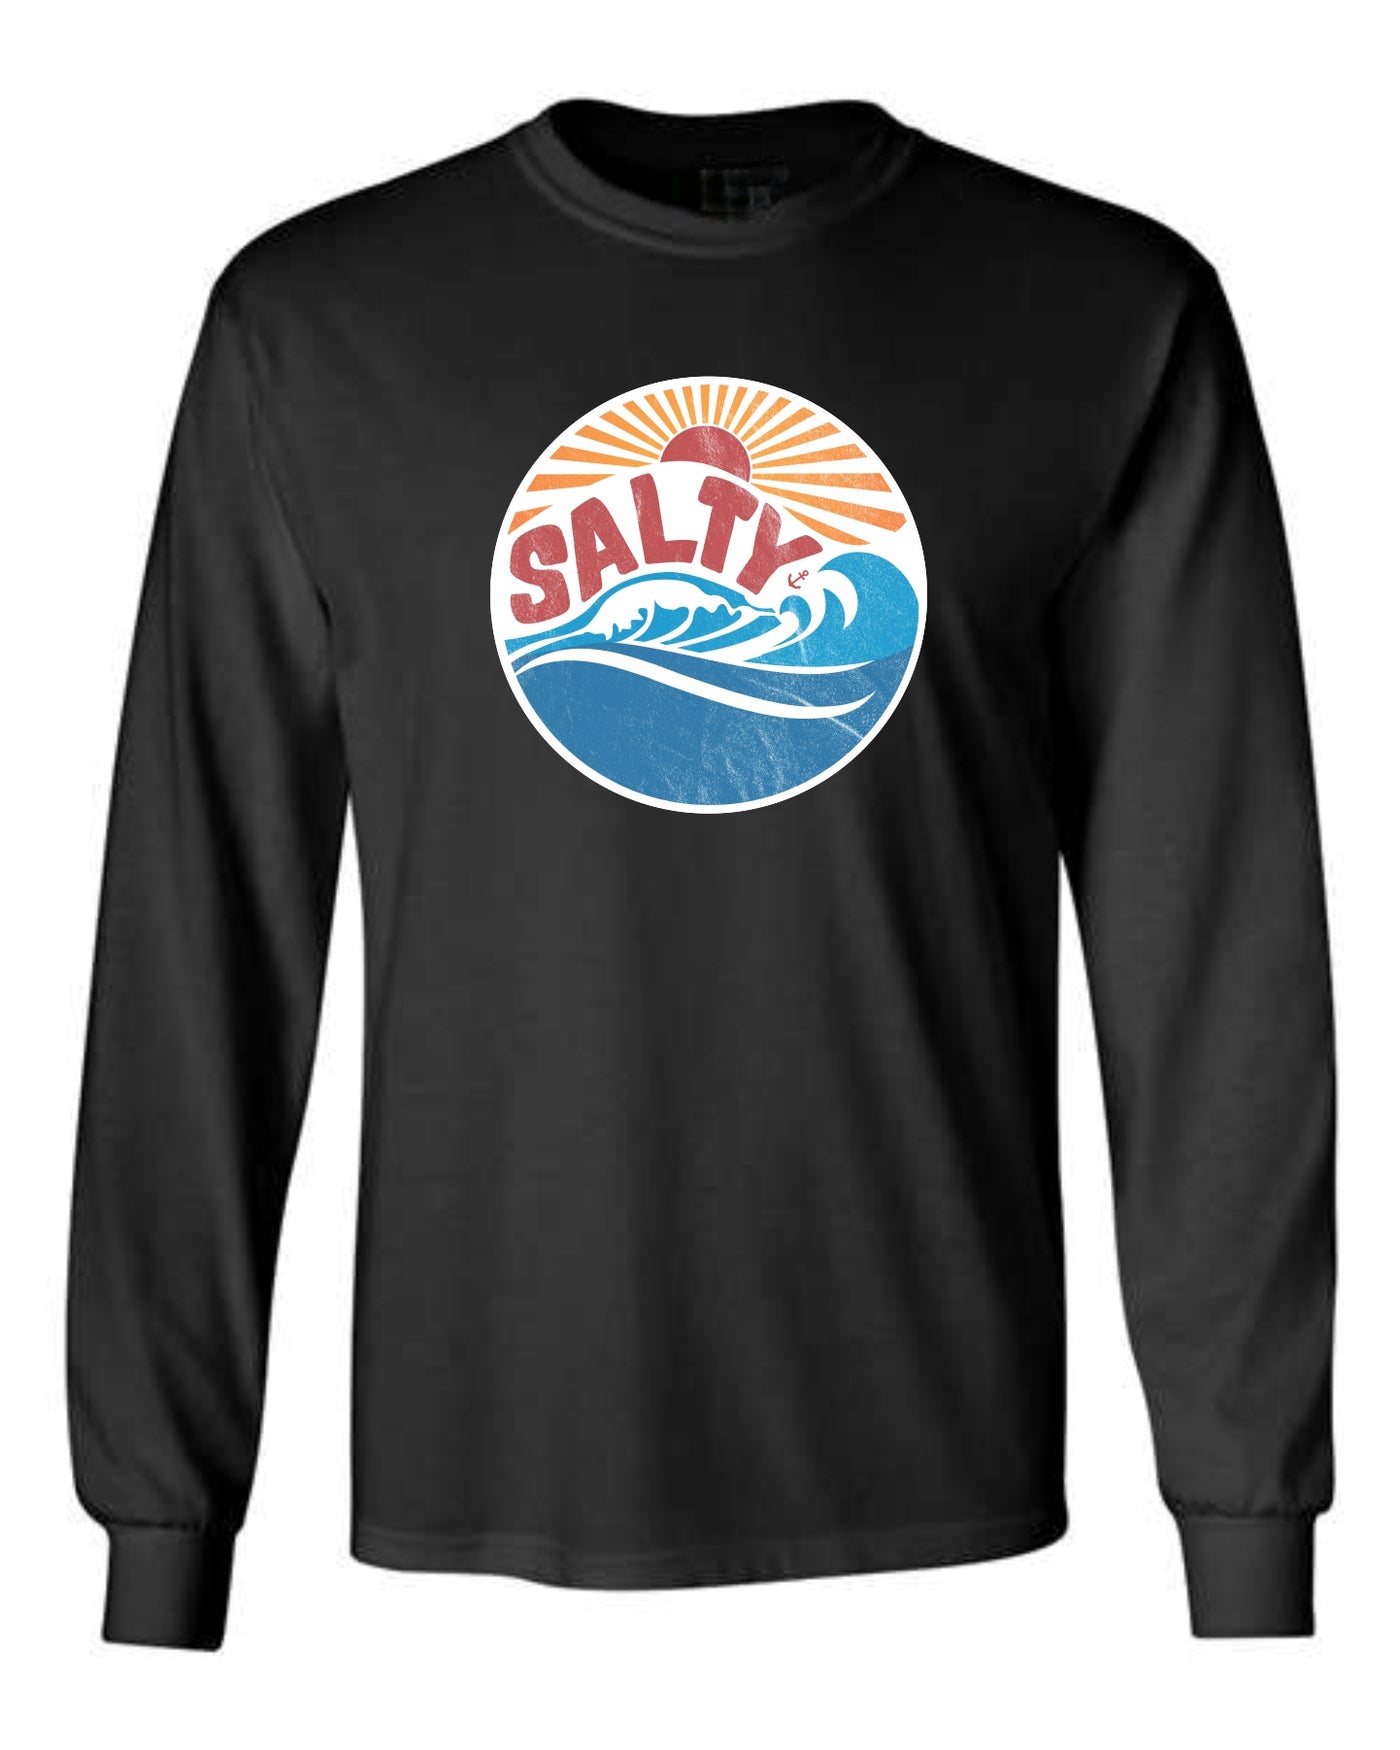 "Salty" Waves Unisex Long Sleeve Shirt